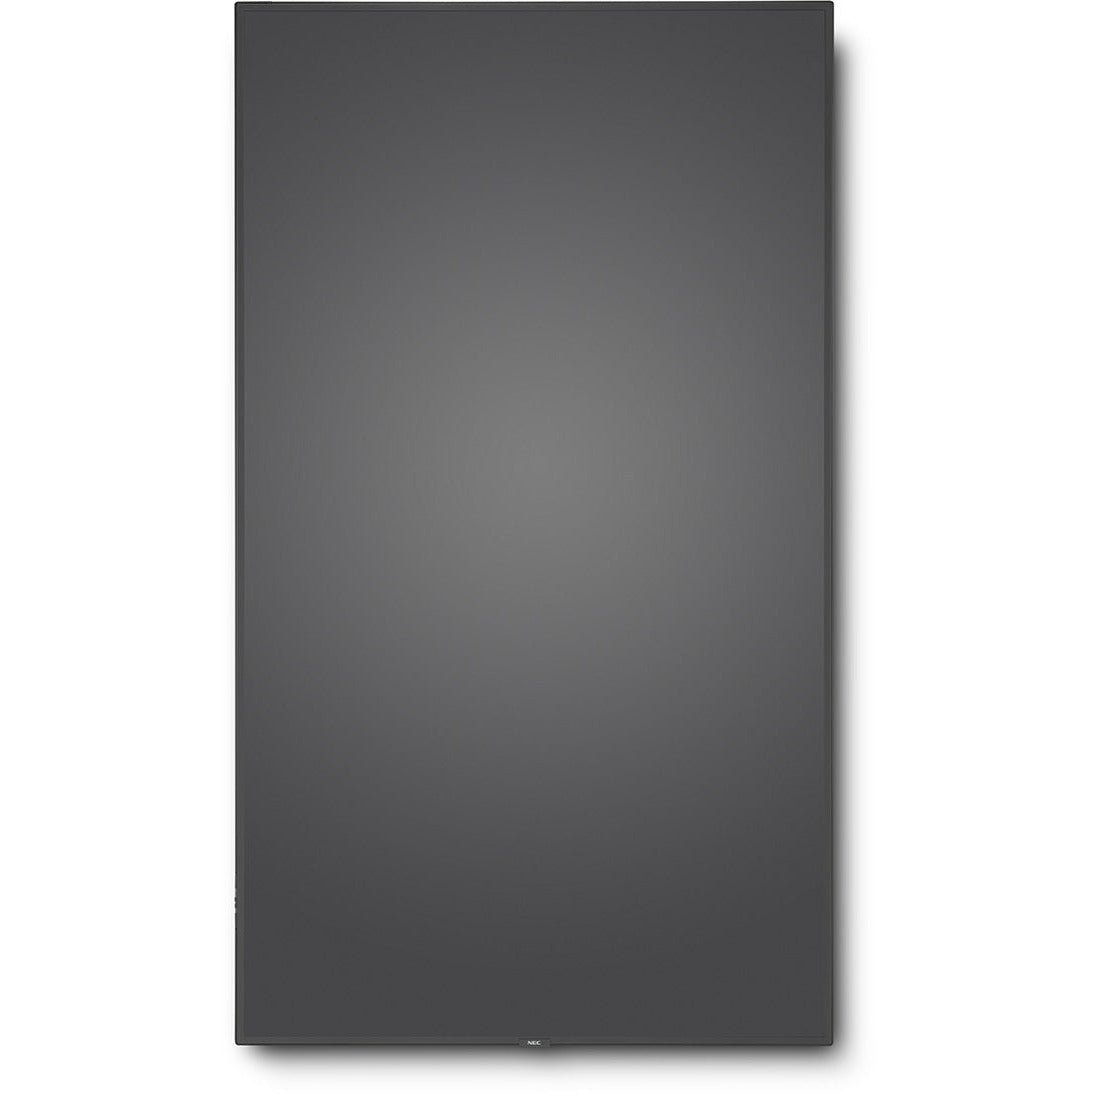 NEC MultiSync® V984Q LCD 98" Midrange Large Format Display